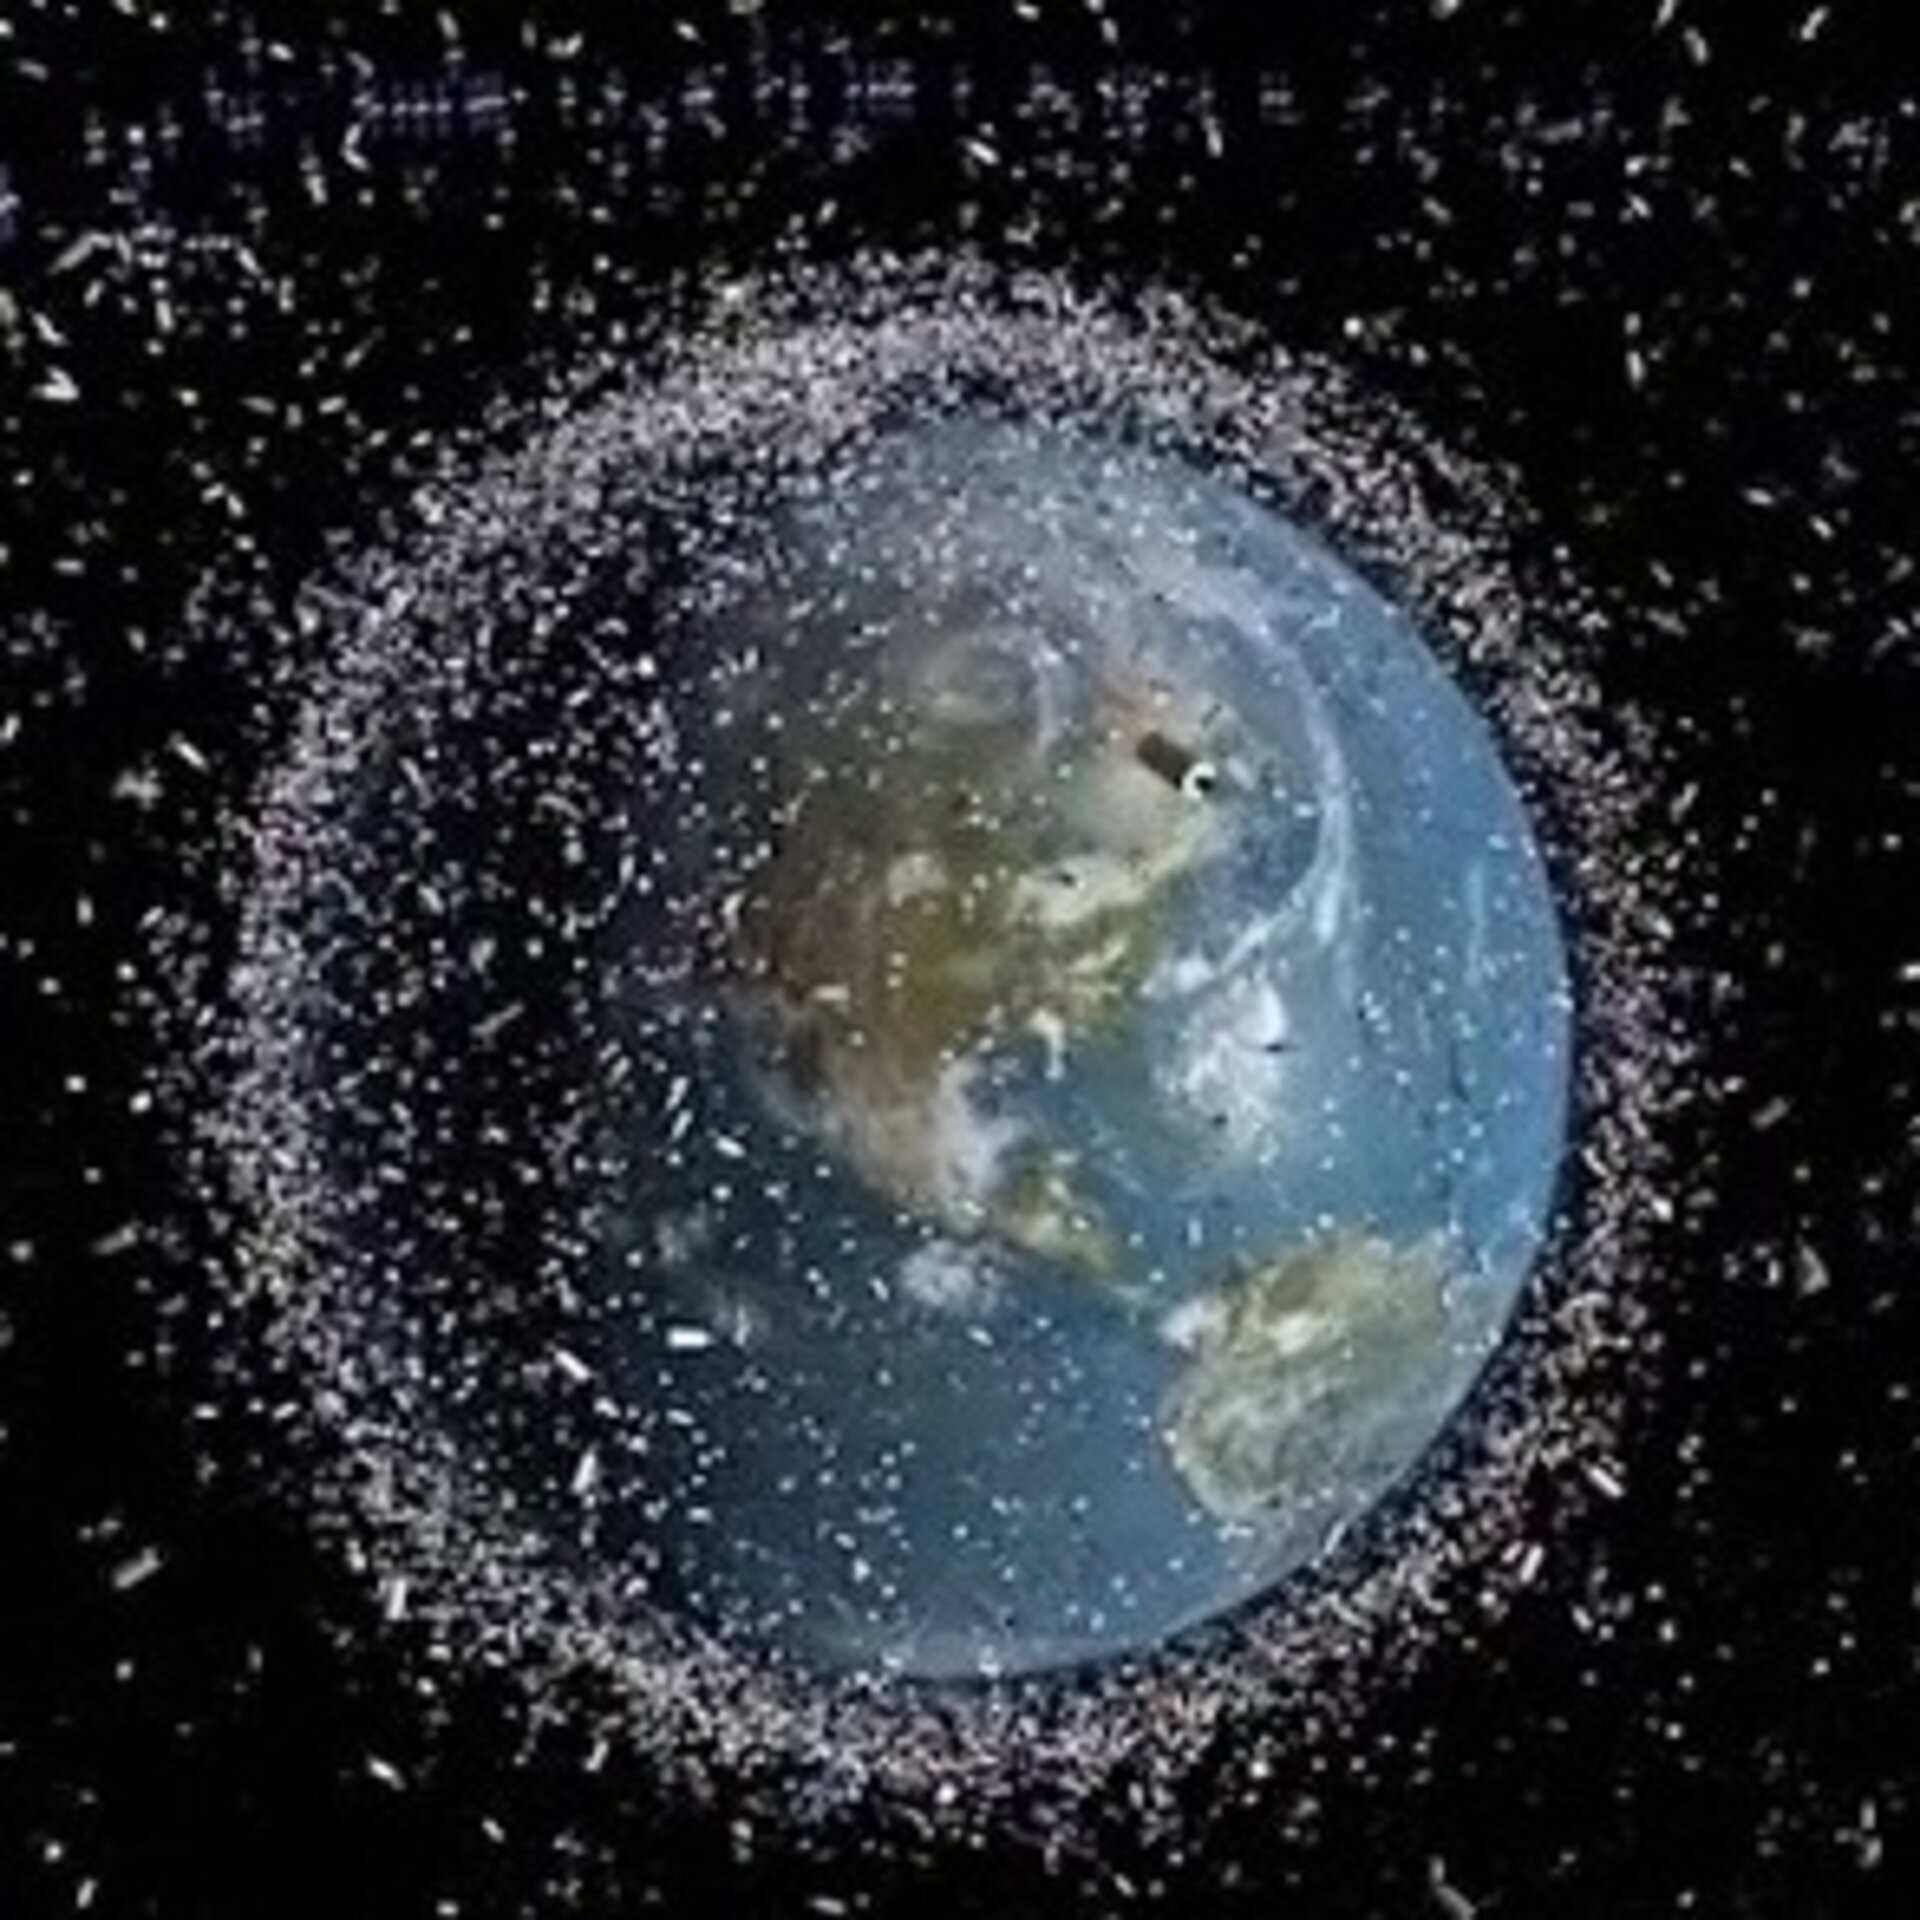 Space debris around Earth